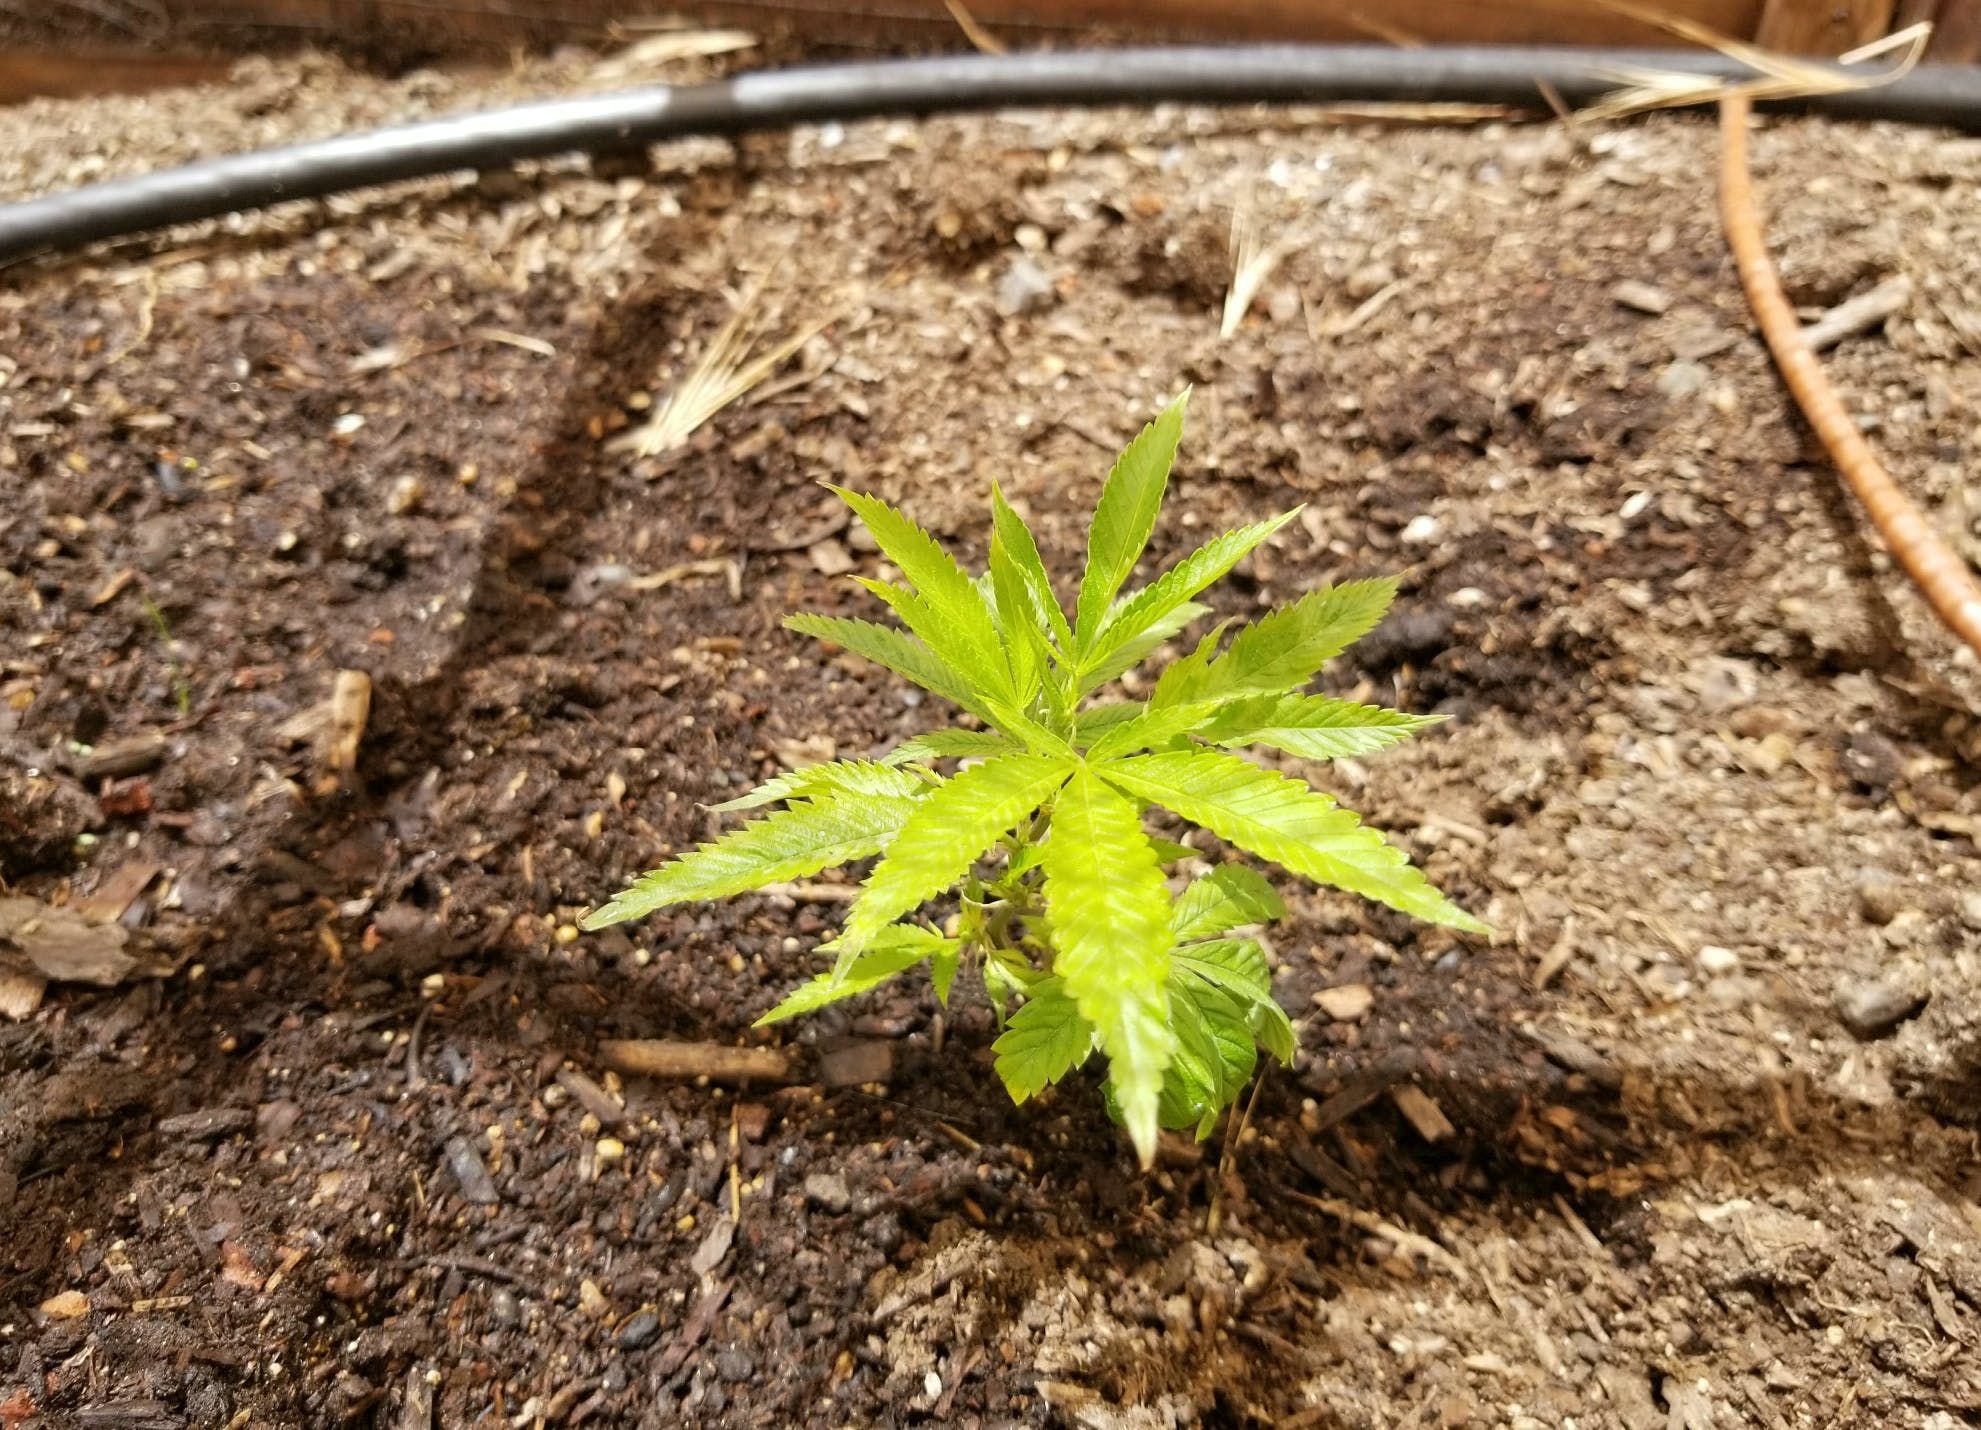 legalization_encourages_sustainable_marijuana_farming_42a9027ddc